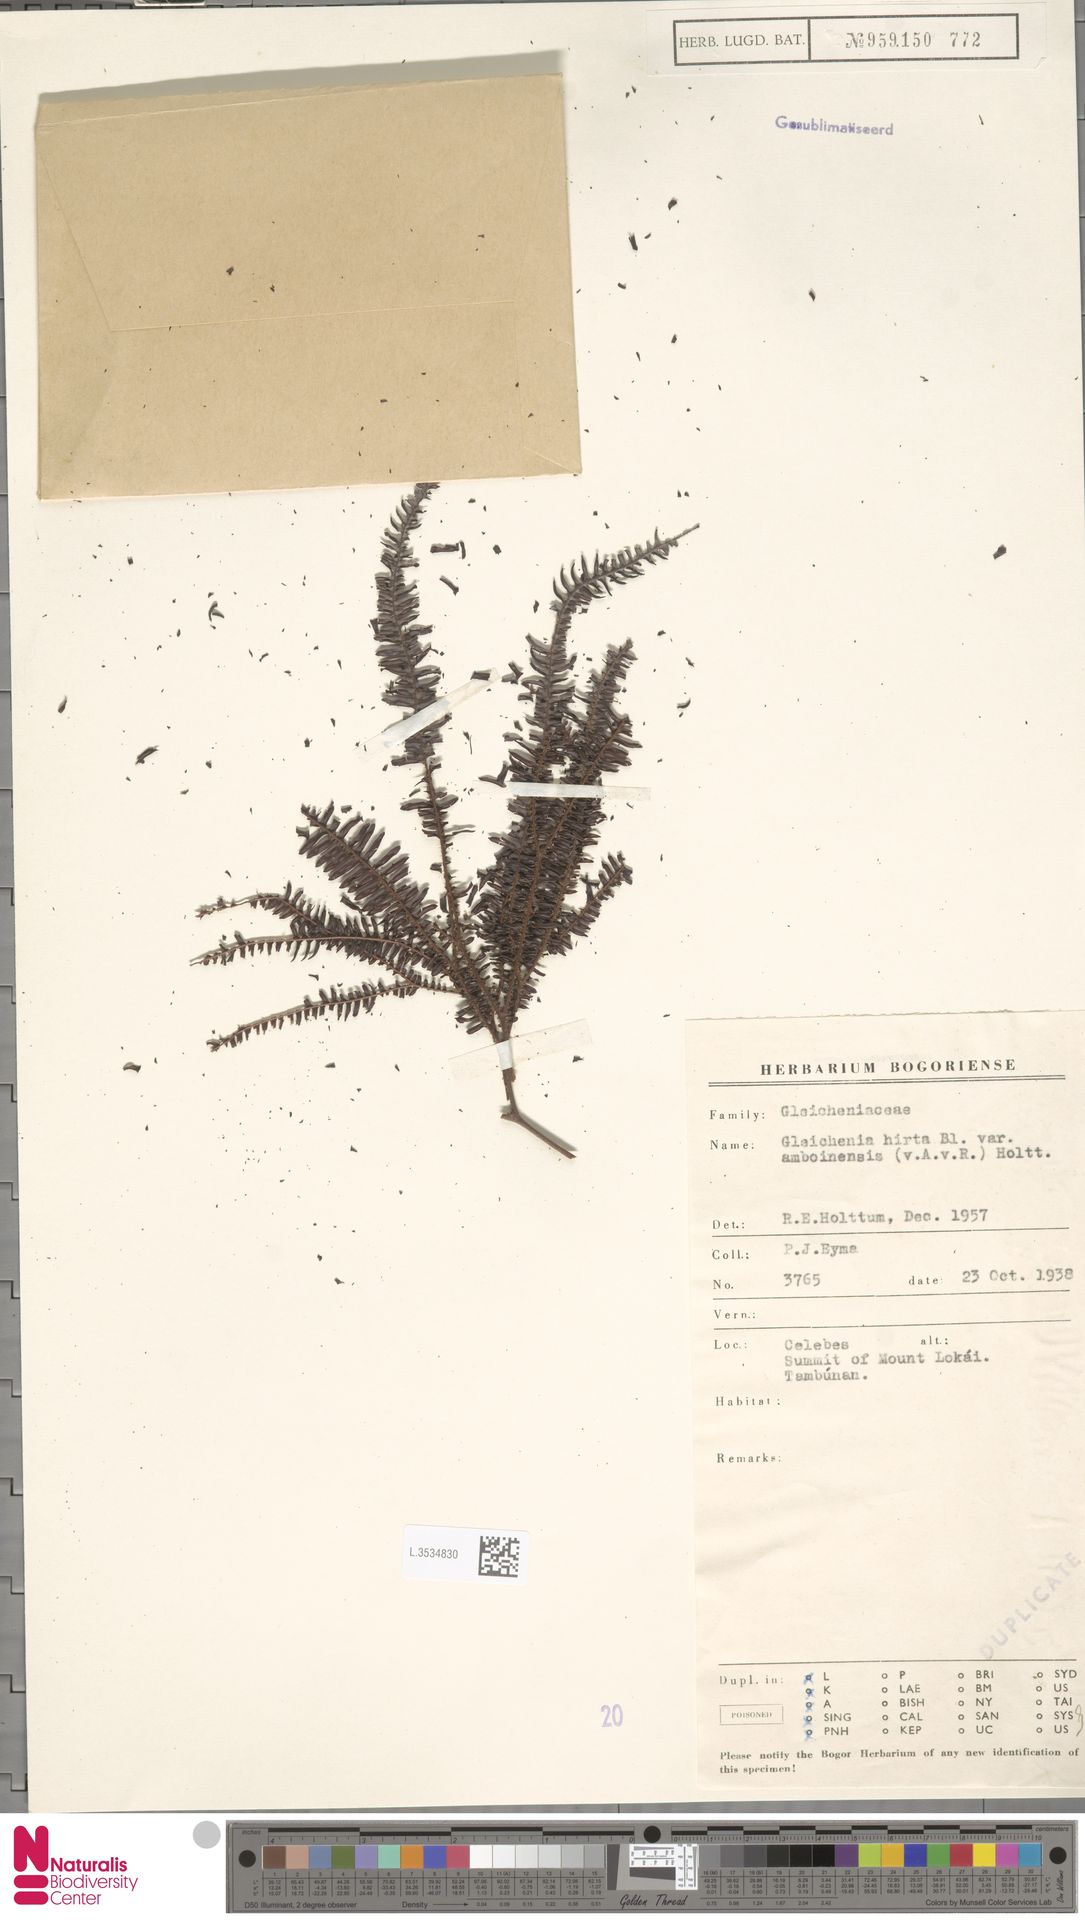 Sticherus hirtus var. amboinensis image